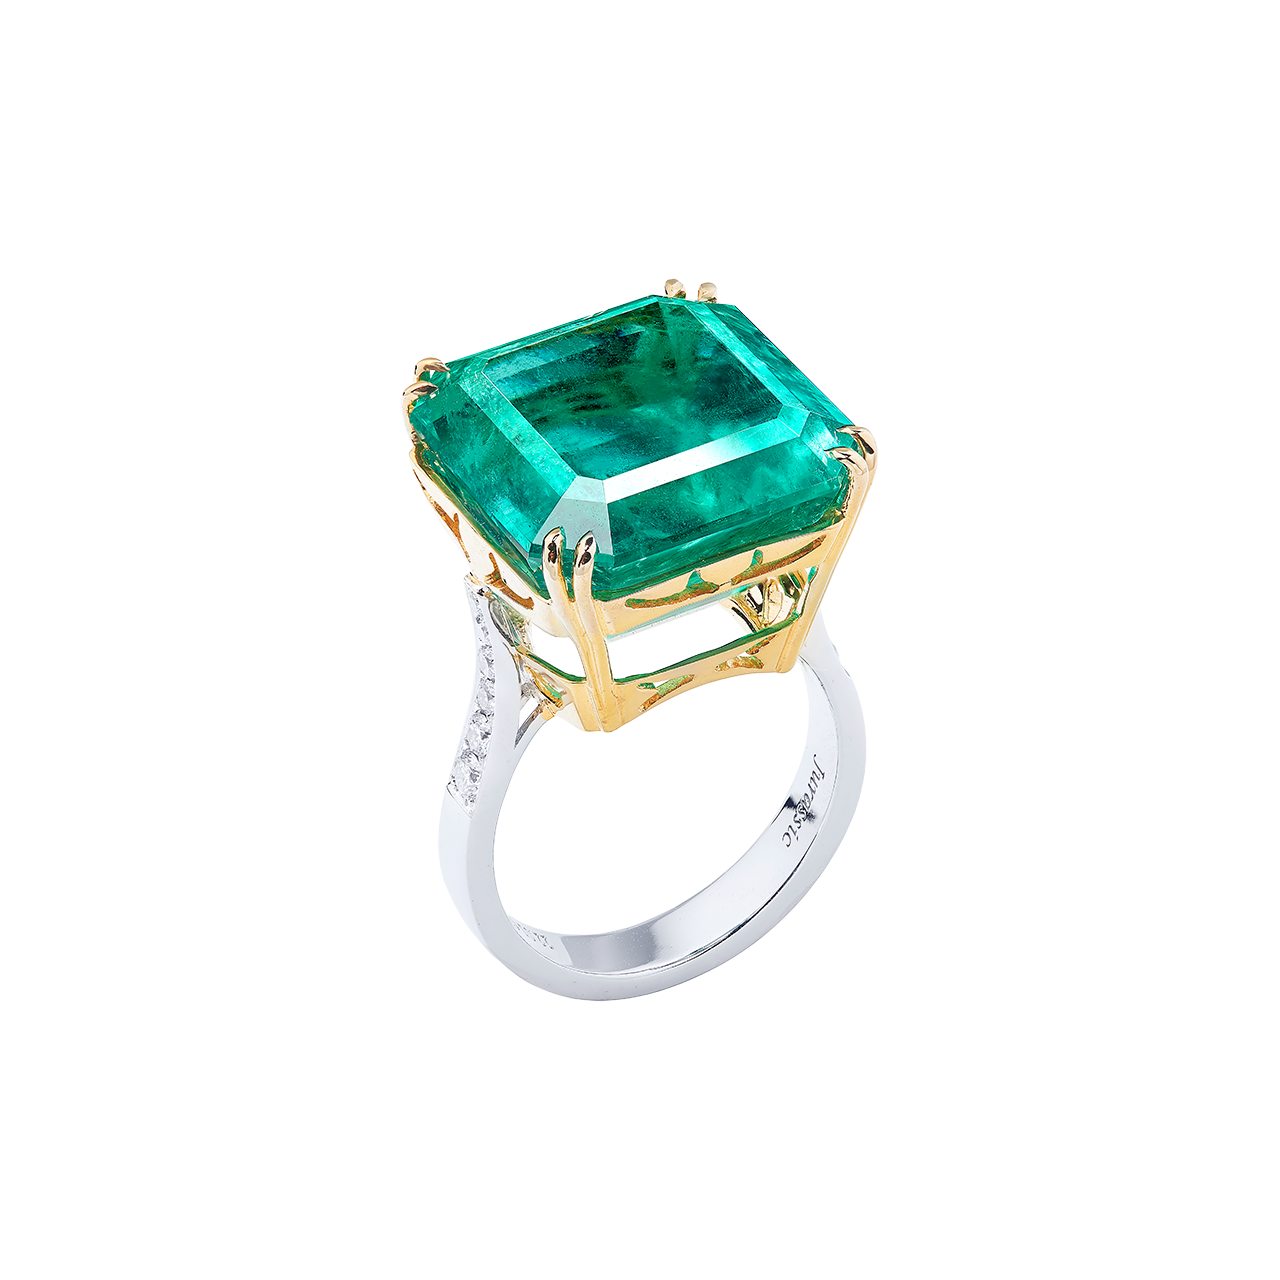 哥倫比亞祖母綠鑽戒 22.01克拉
Colombia Emerald And Diamond
Ring